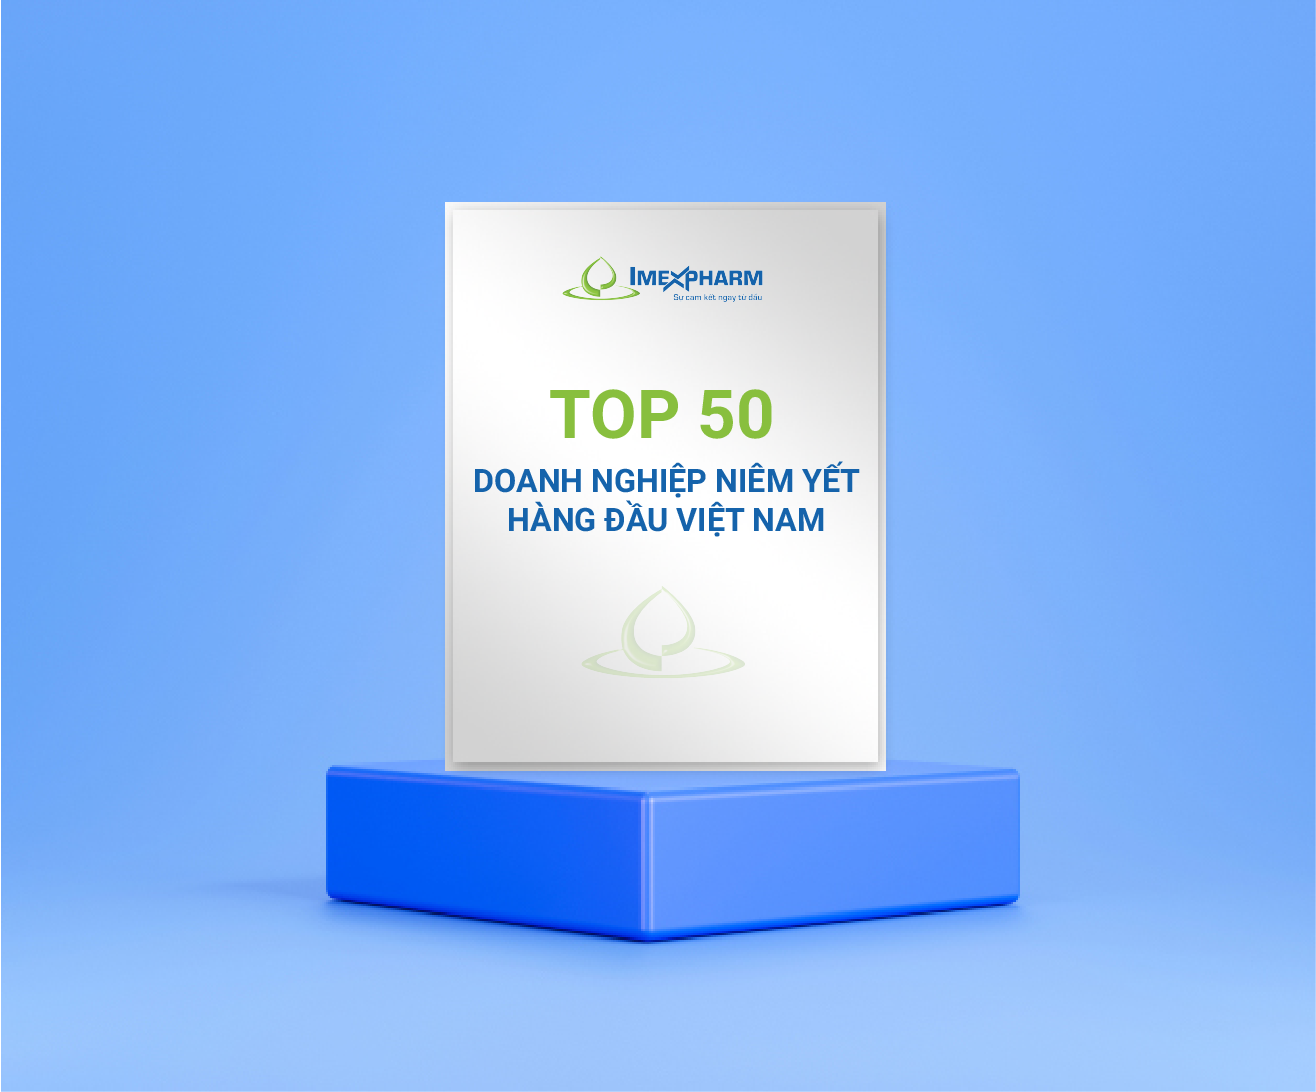 “Top 50 leading listed enterprises in Vietnam”